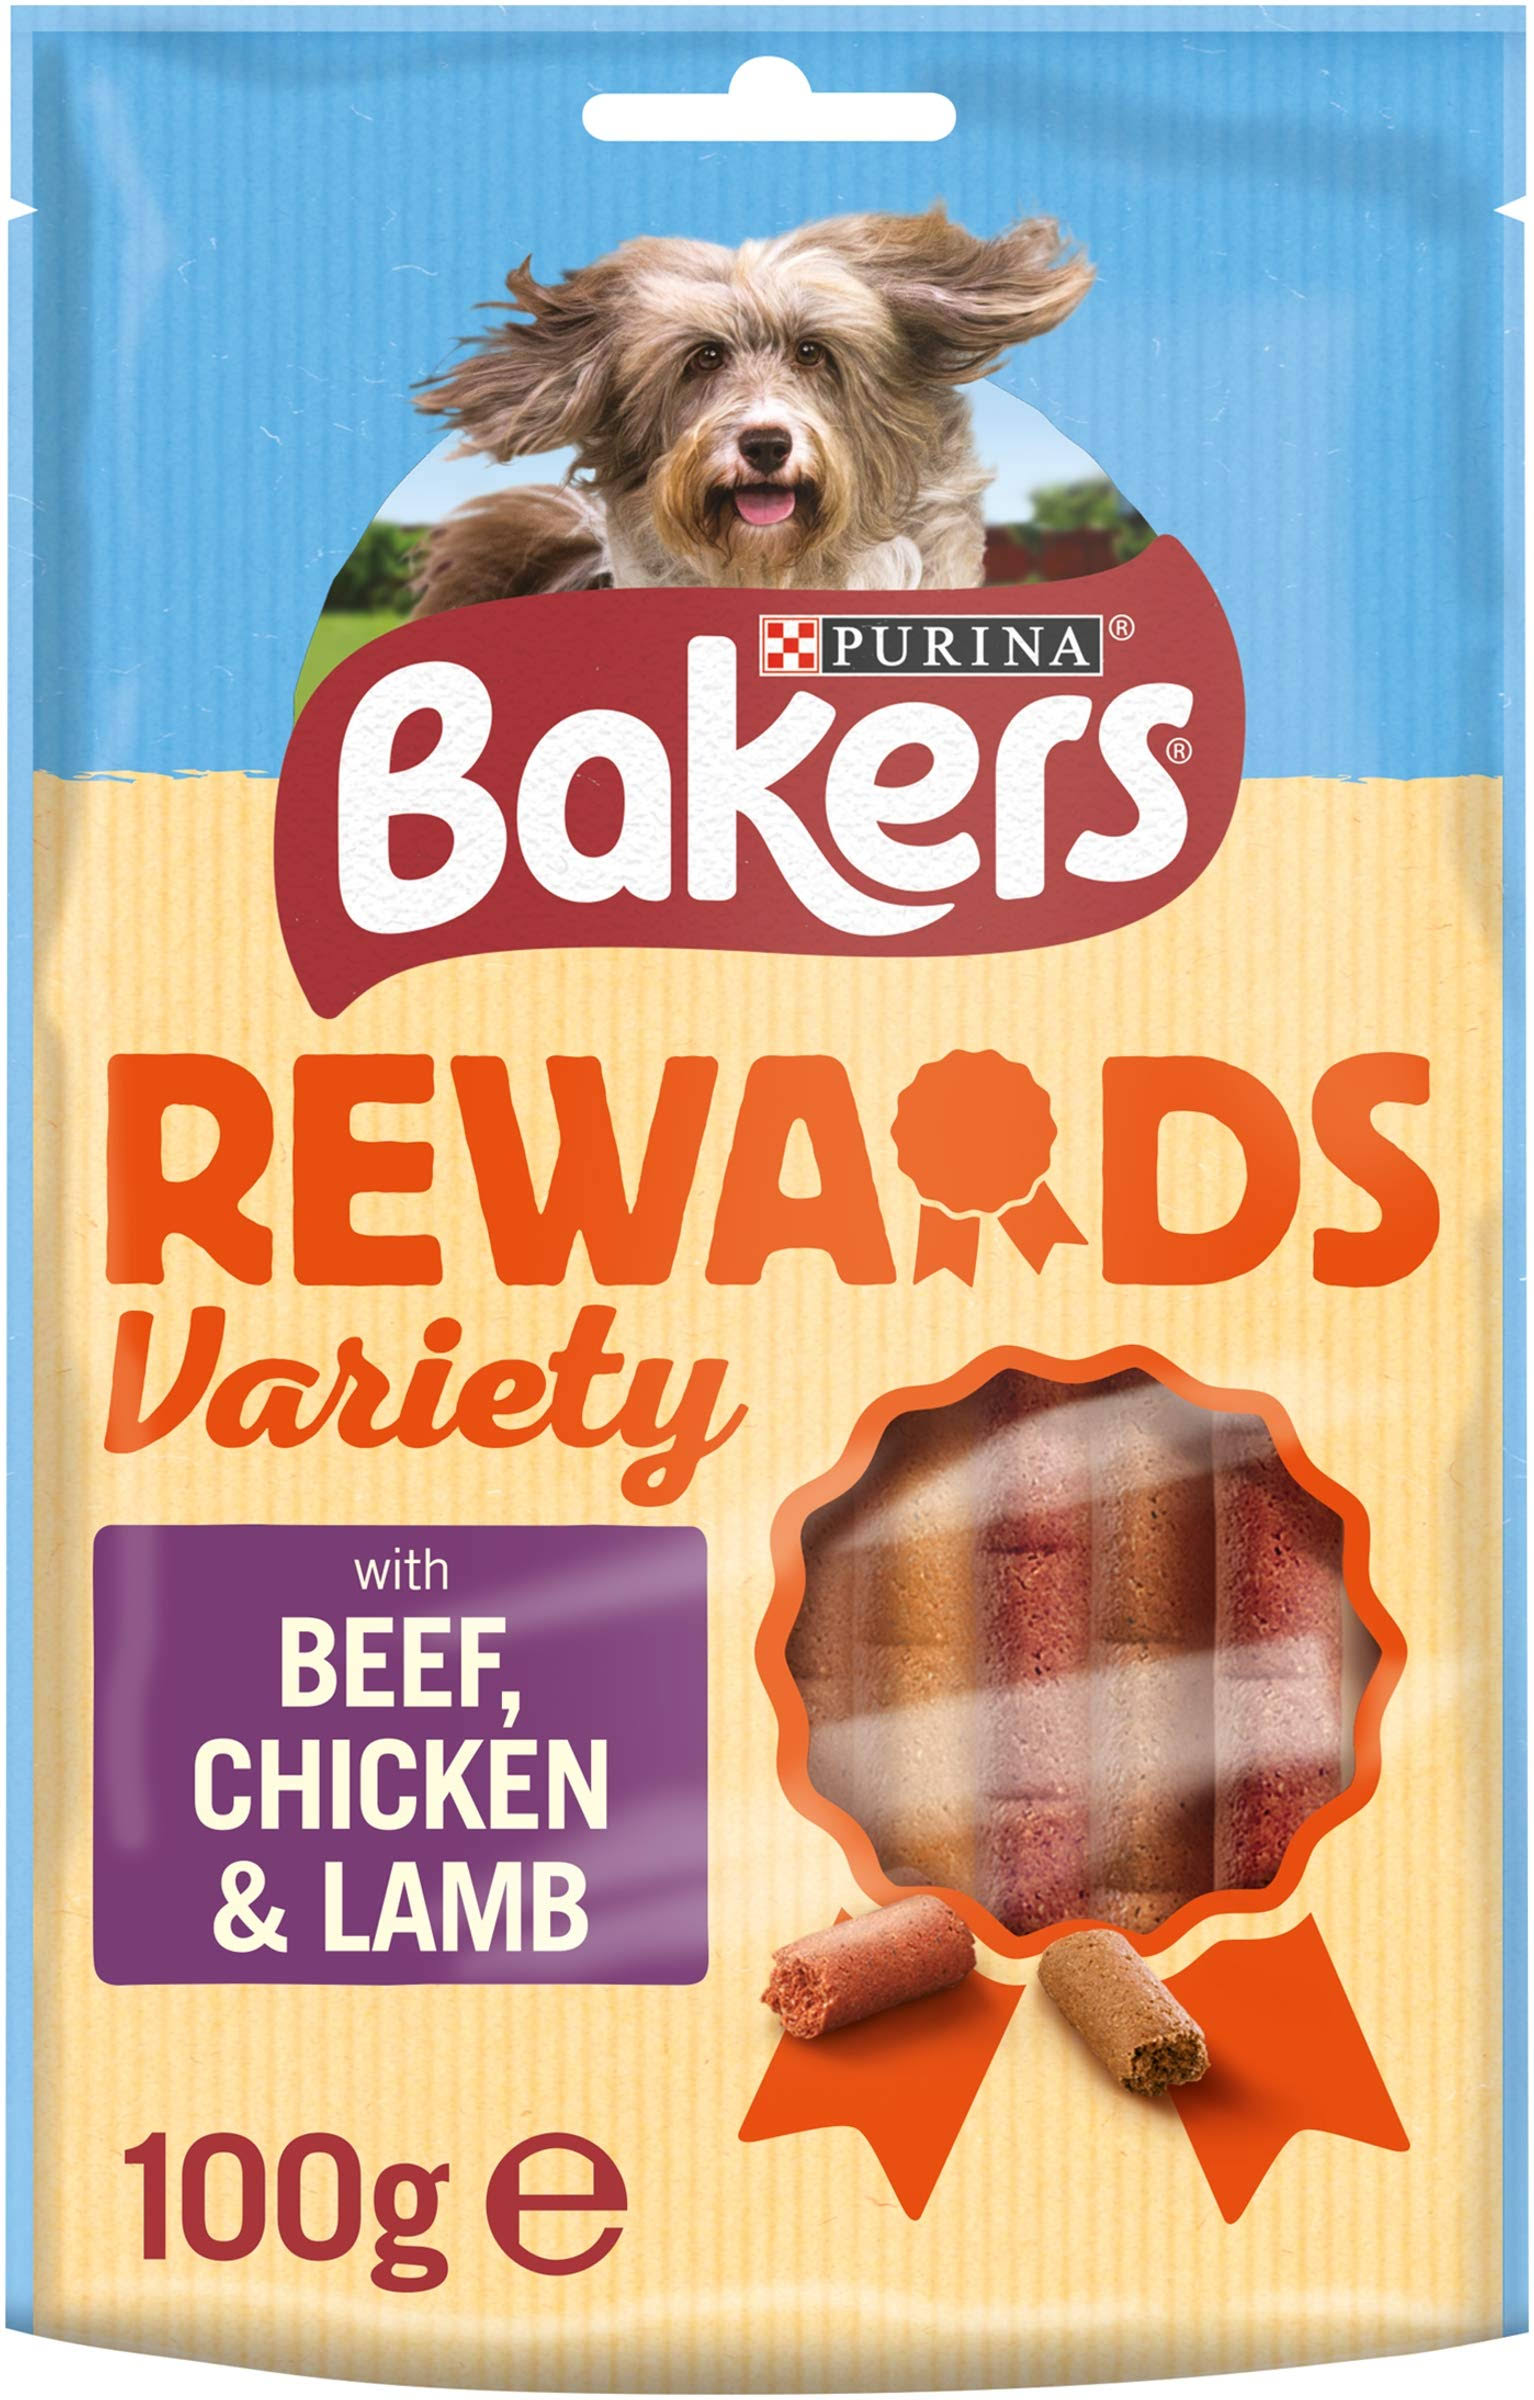 Bakers Rewards Dog Treats Variety 100g